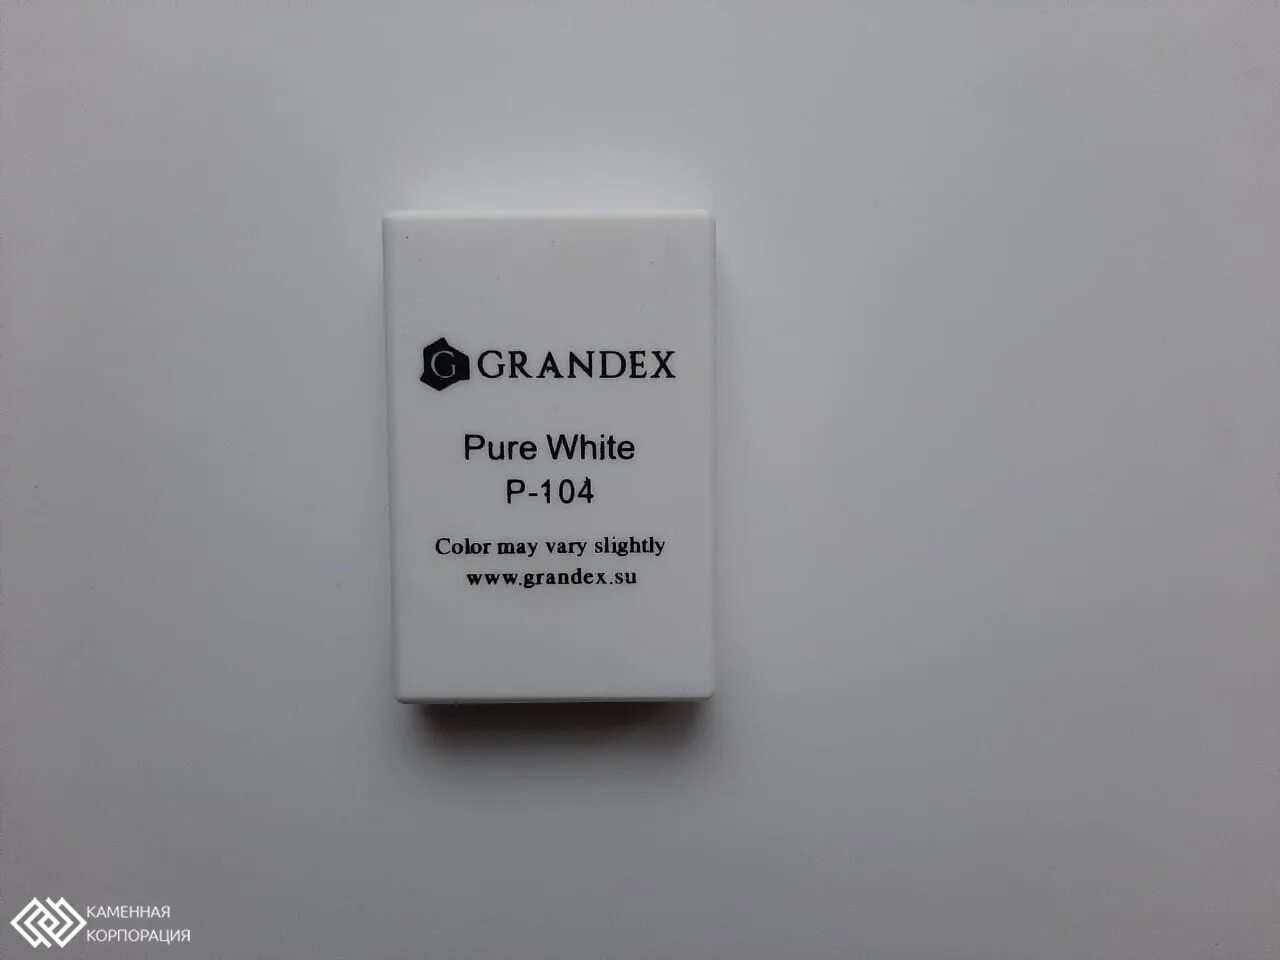 Grandex p-104 Pure White. Grandex p104 столешница. Акриловый искусственный камень grandex p-104. Grandex p-104** Pure White, 6 мм. З 104